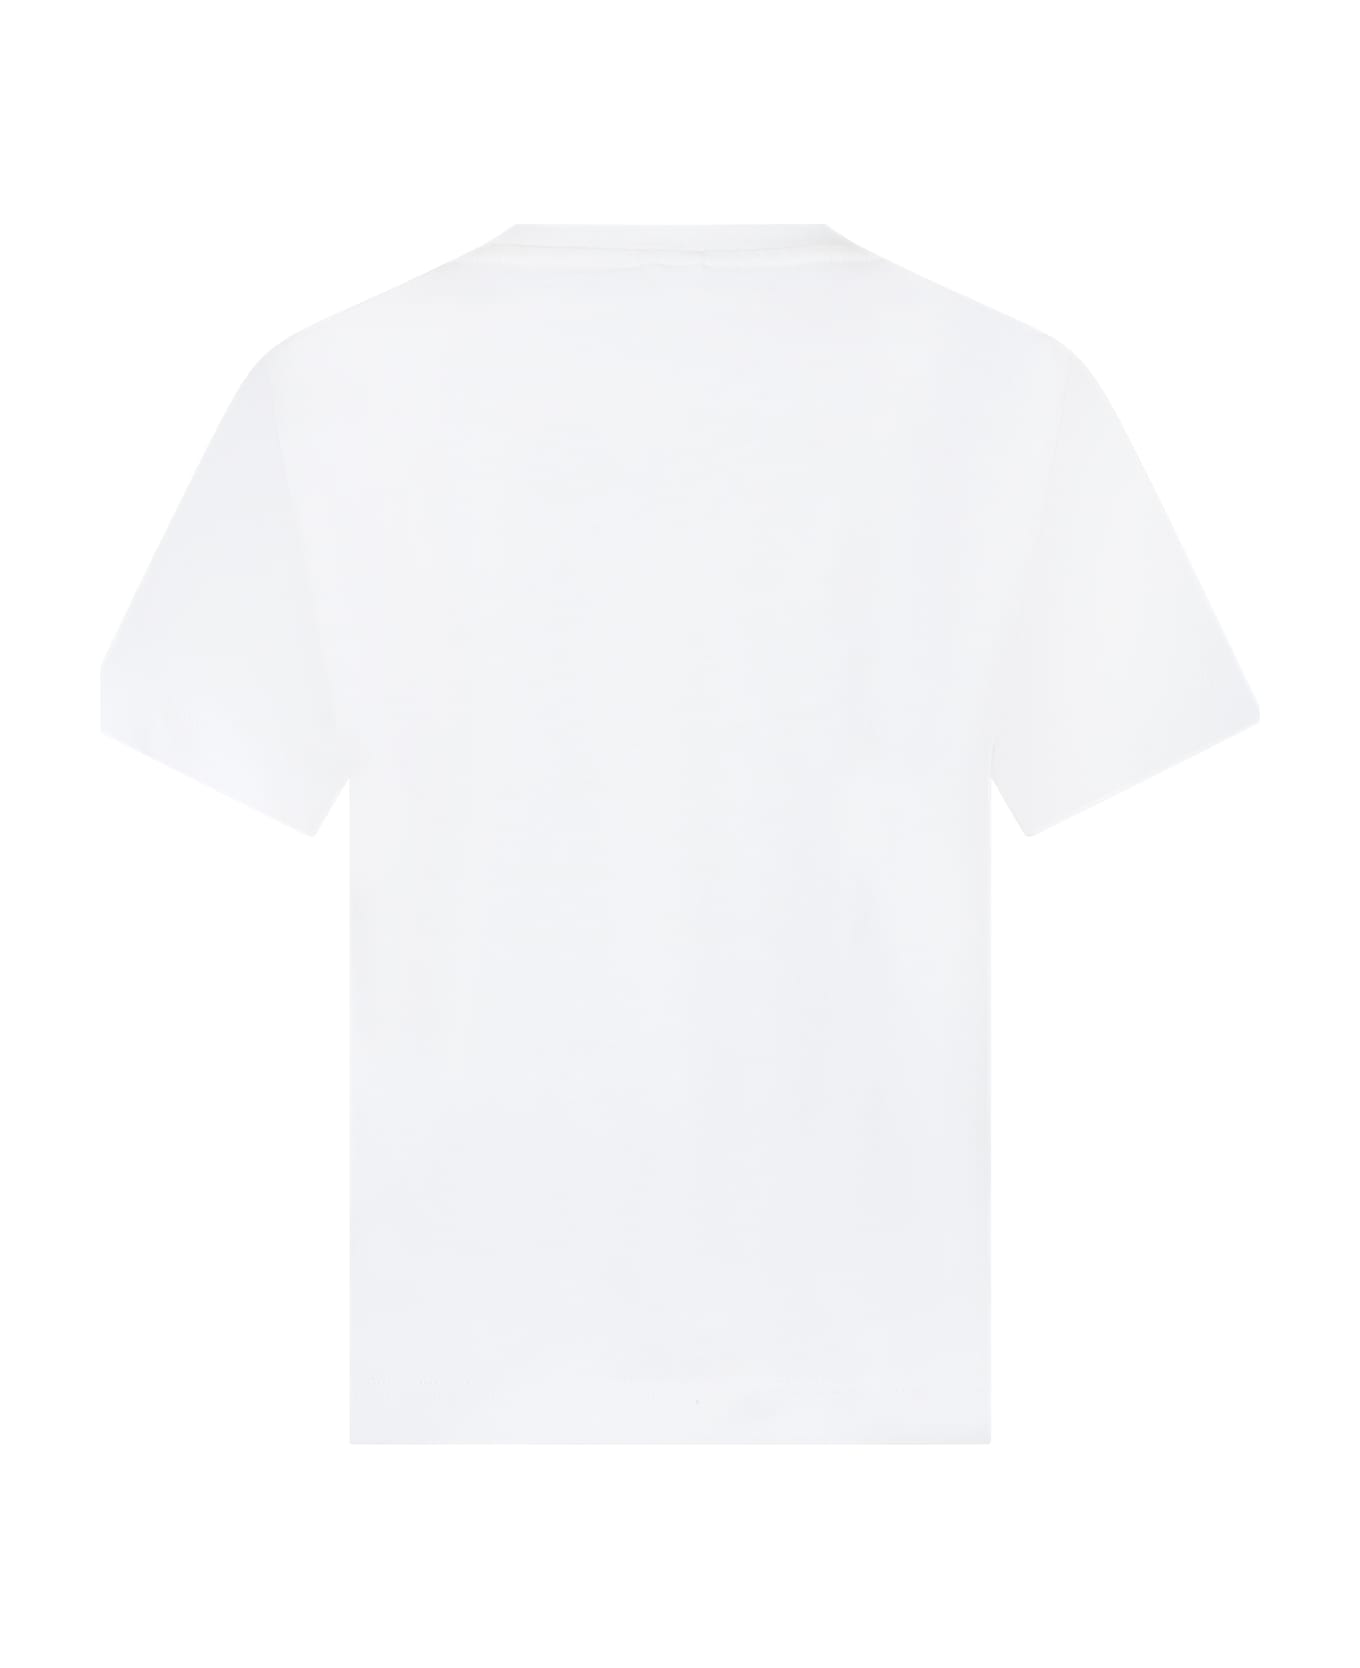 Stella McCartney Kids White T-shirt For Boy With Hamburger Print - White